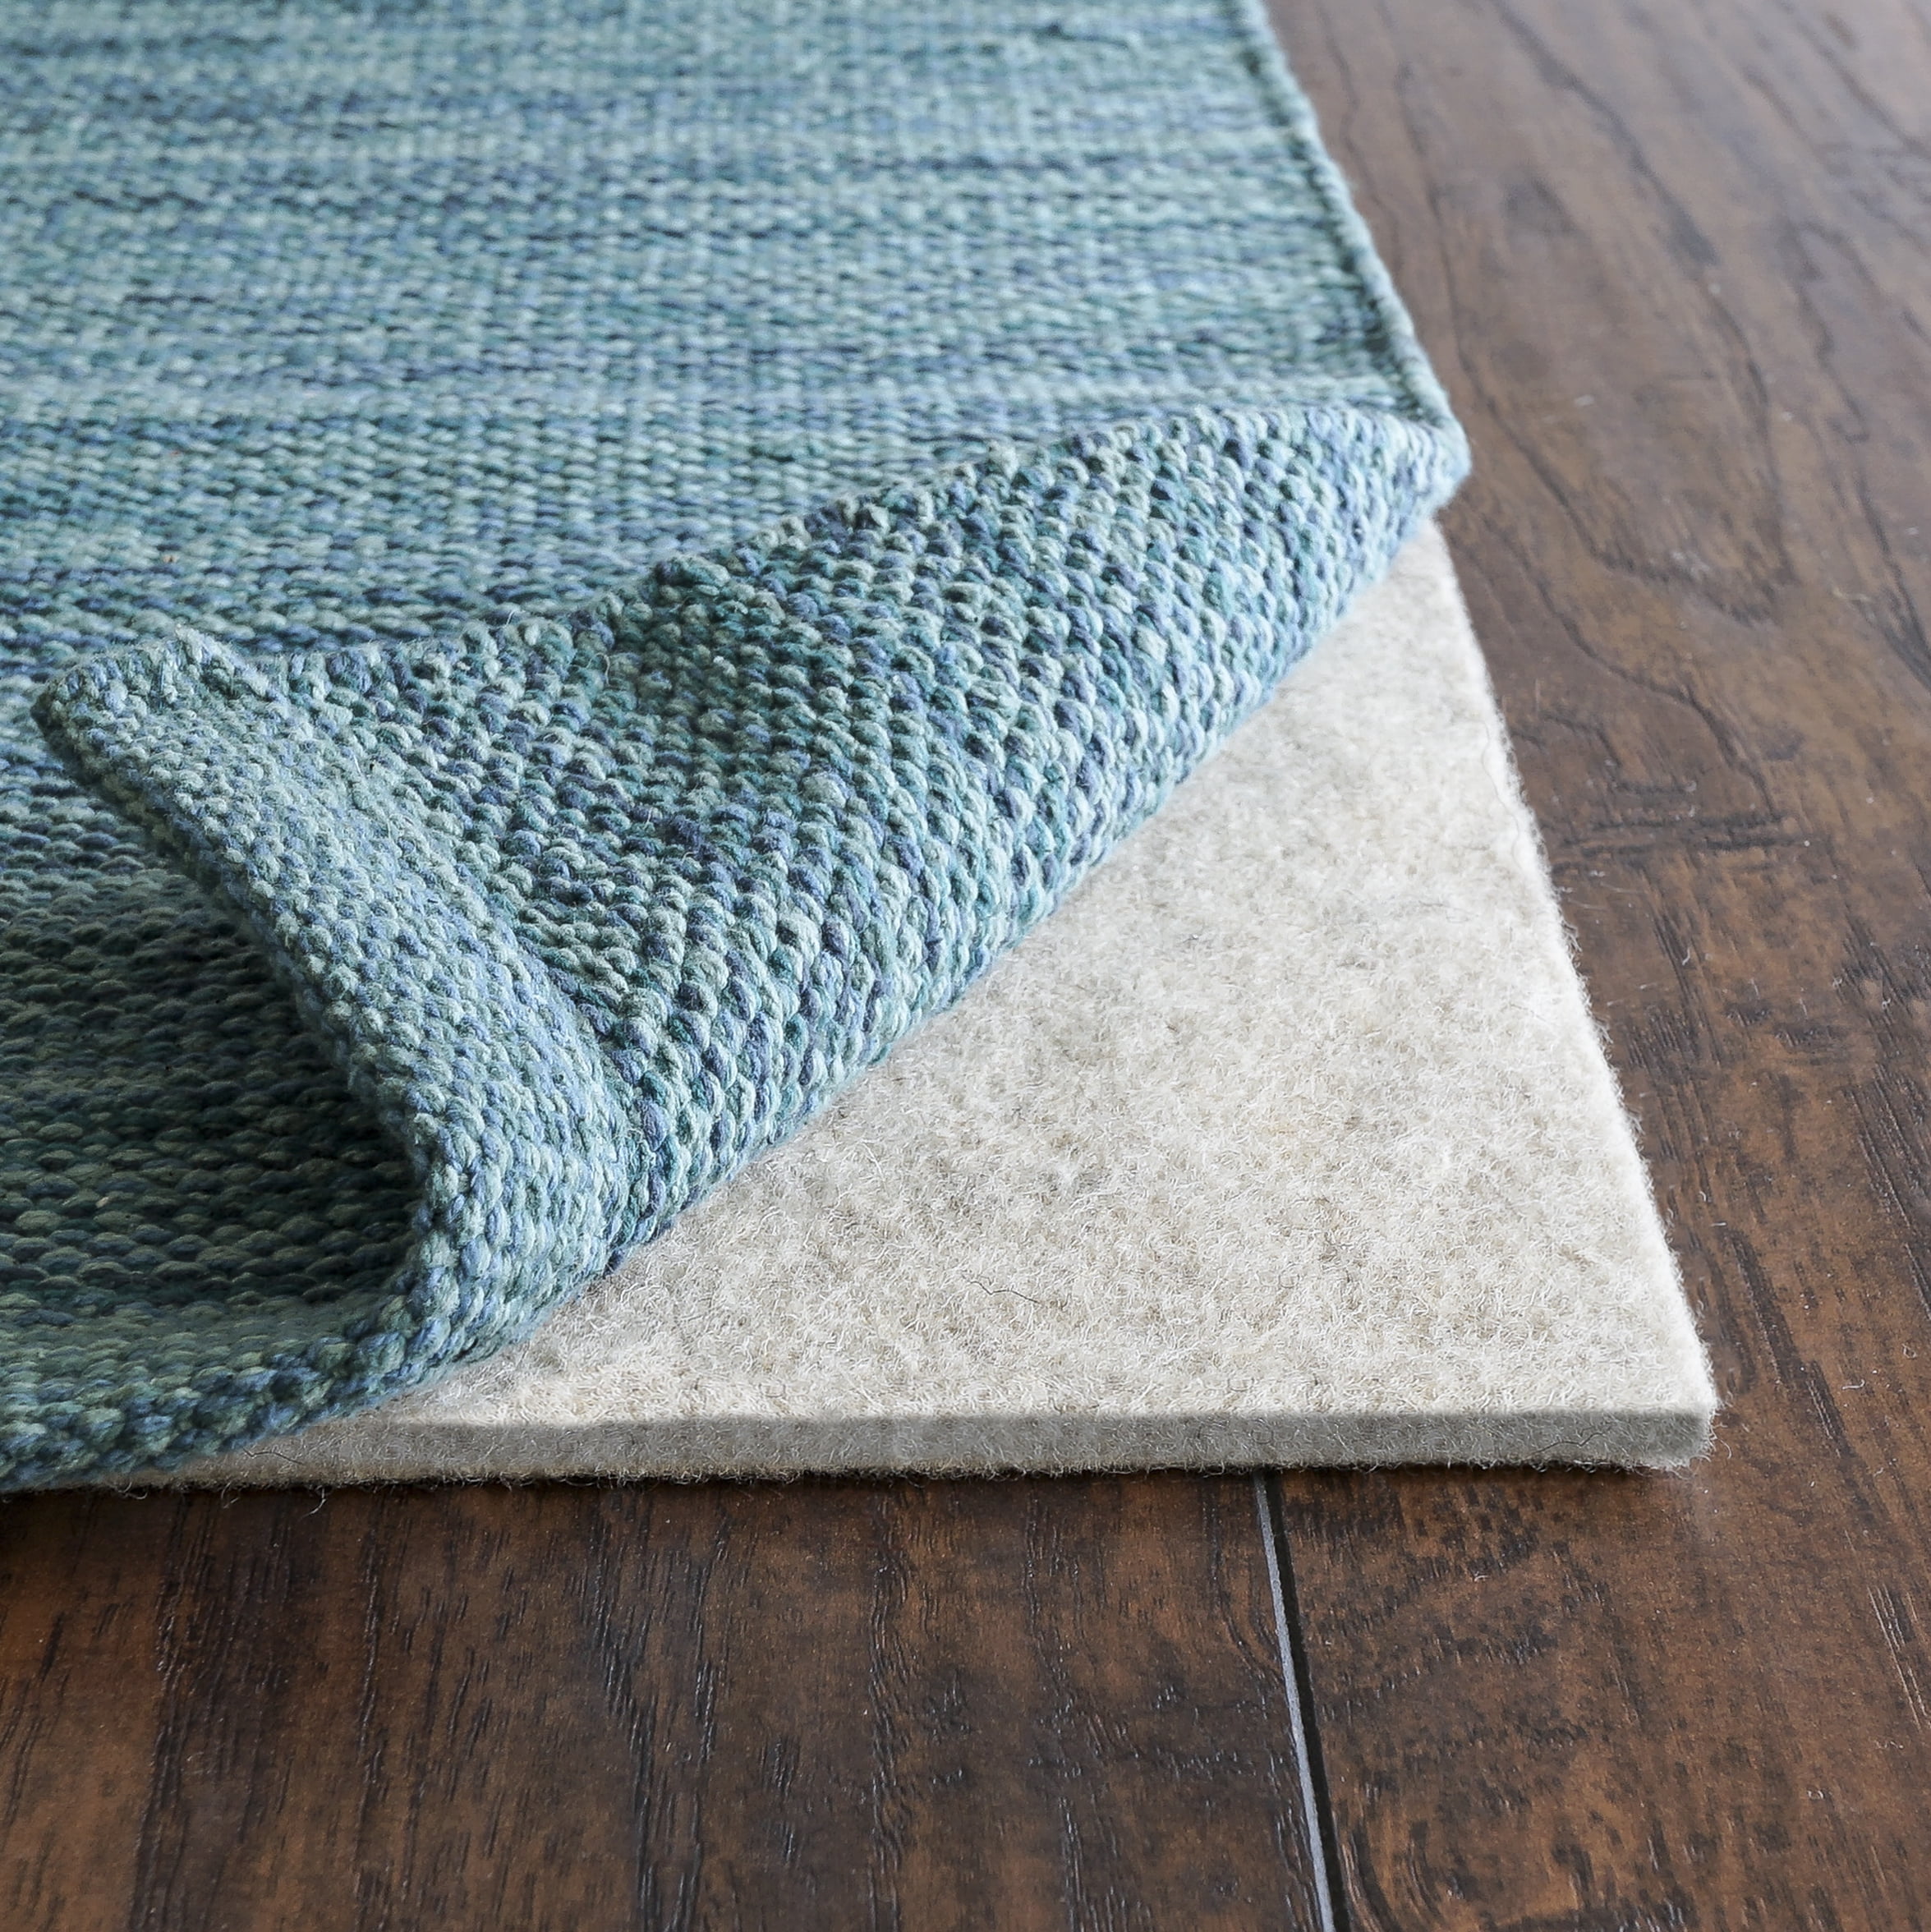 Instabind Carpet Binding - Cactus Green (5ft Section)